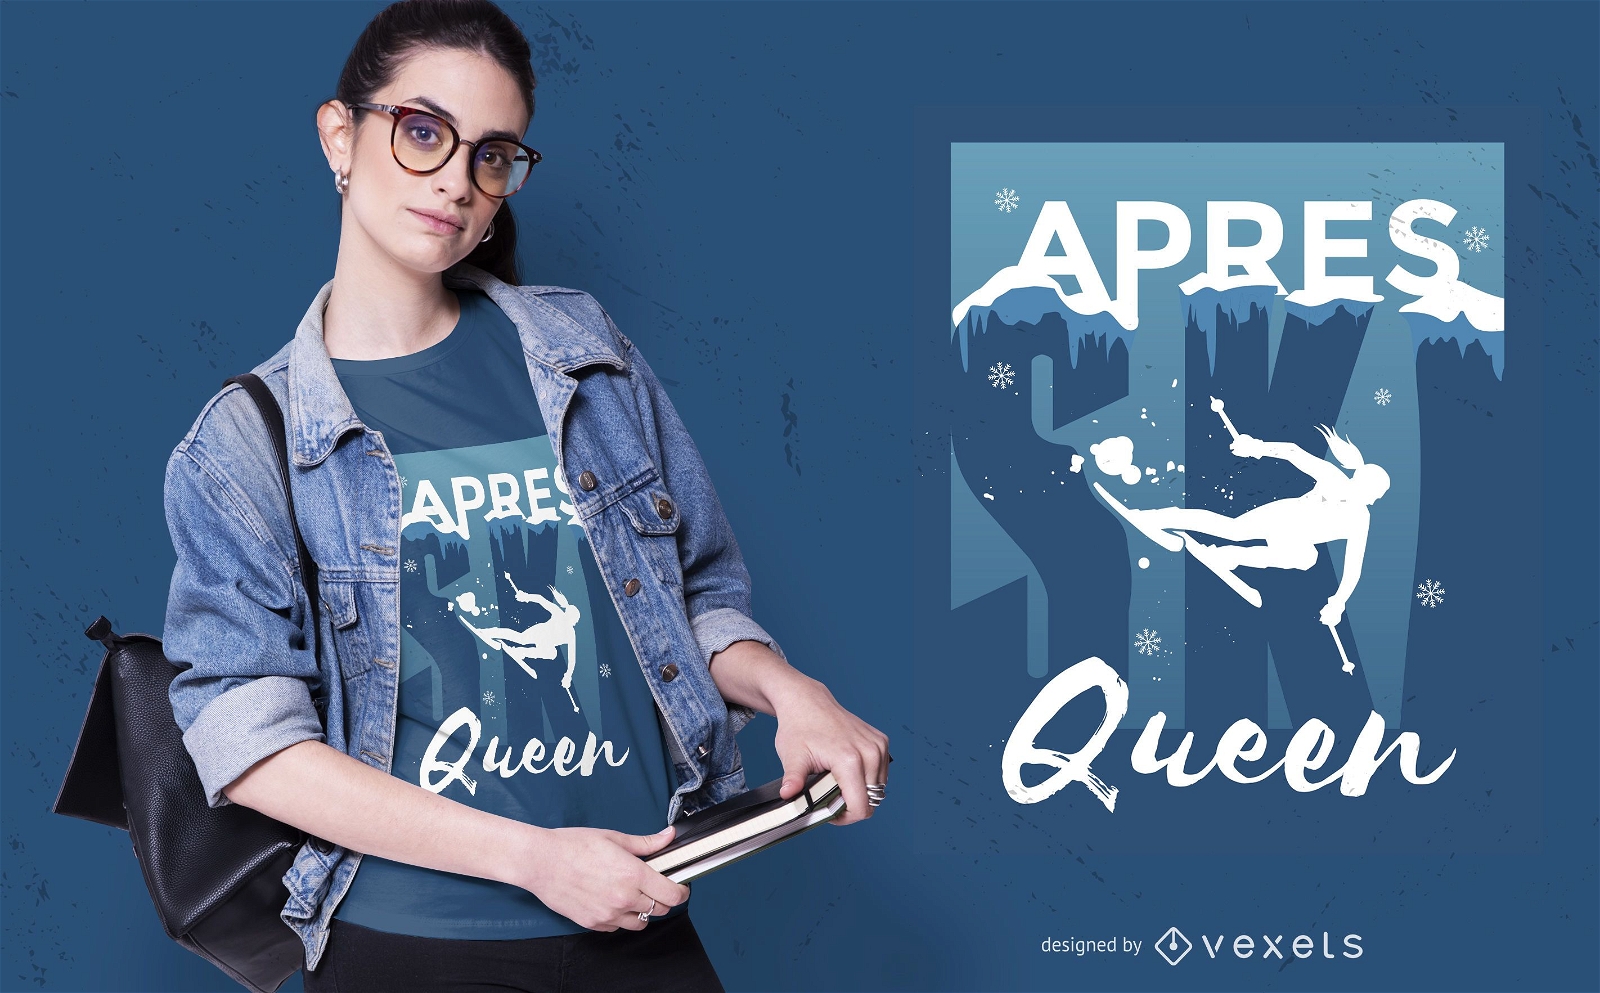 Apres ski queen t-shirt design